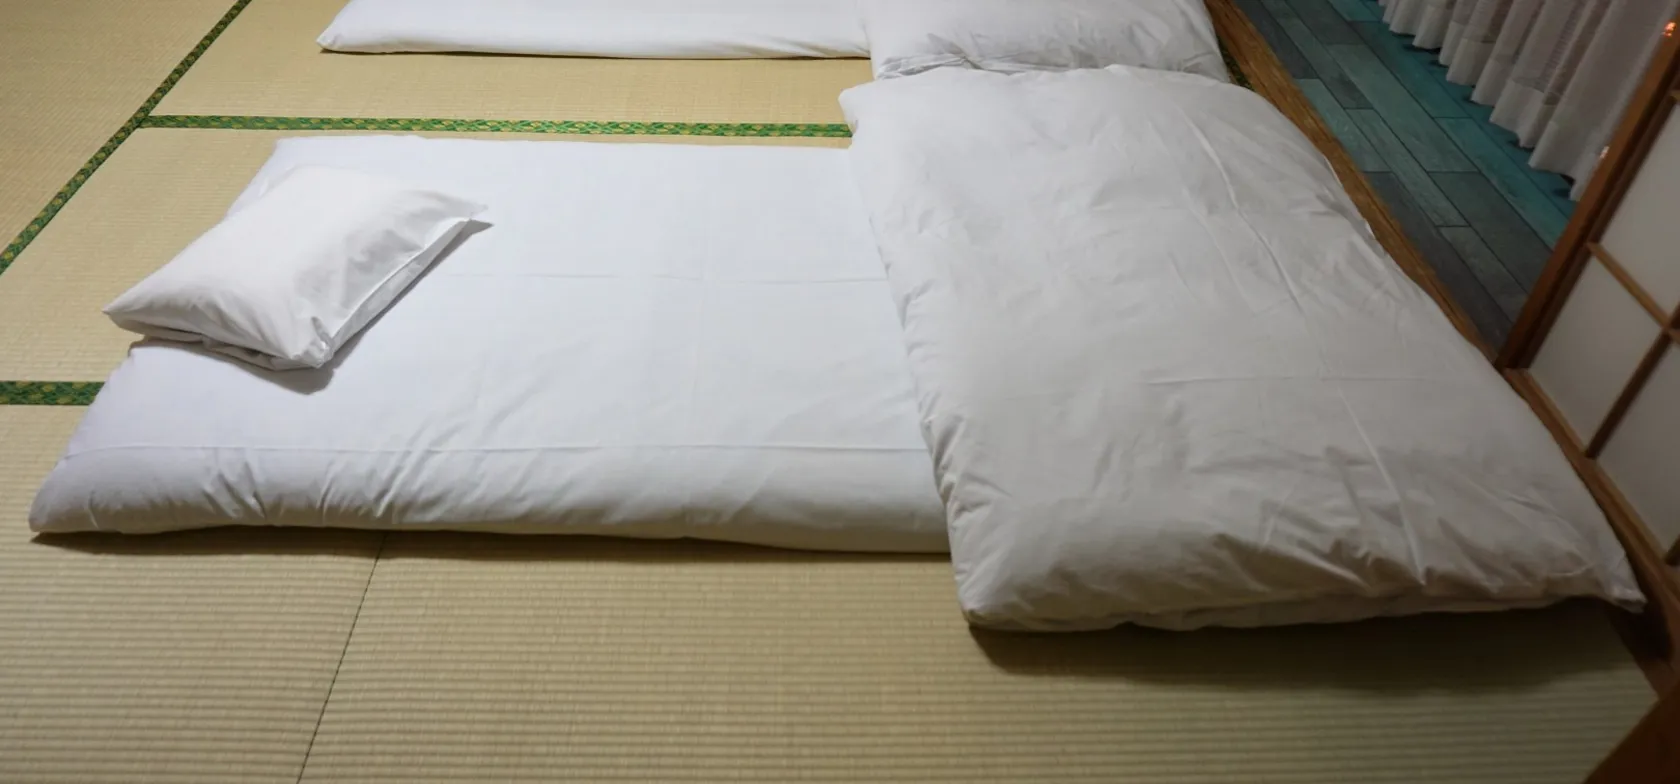 På ryokan i Japan sover vi på madrasser på gulvet - ægte Japanese style. Foto Viktors Farmor